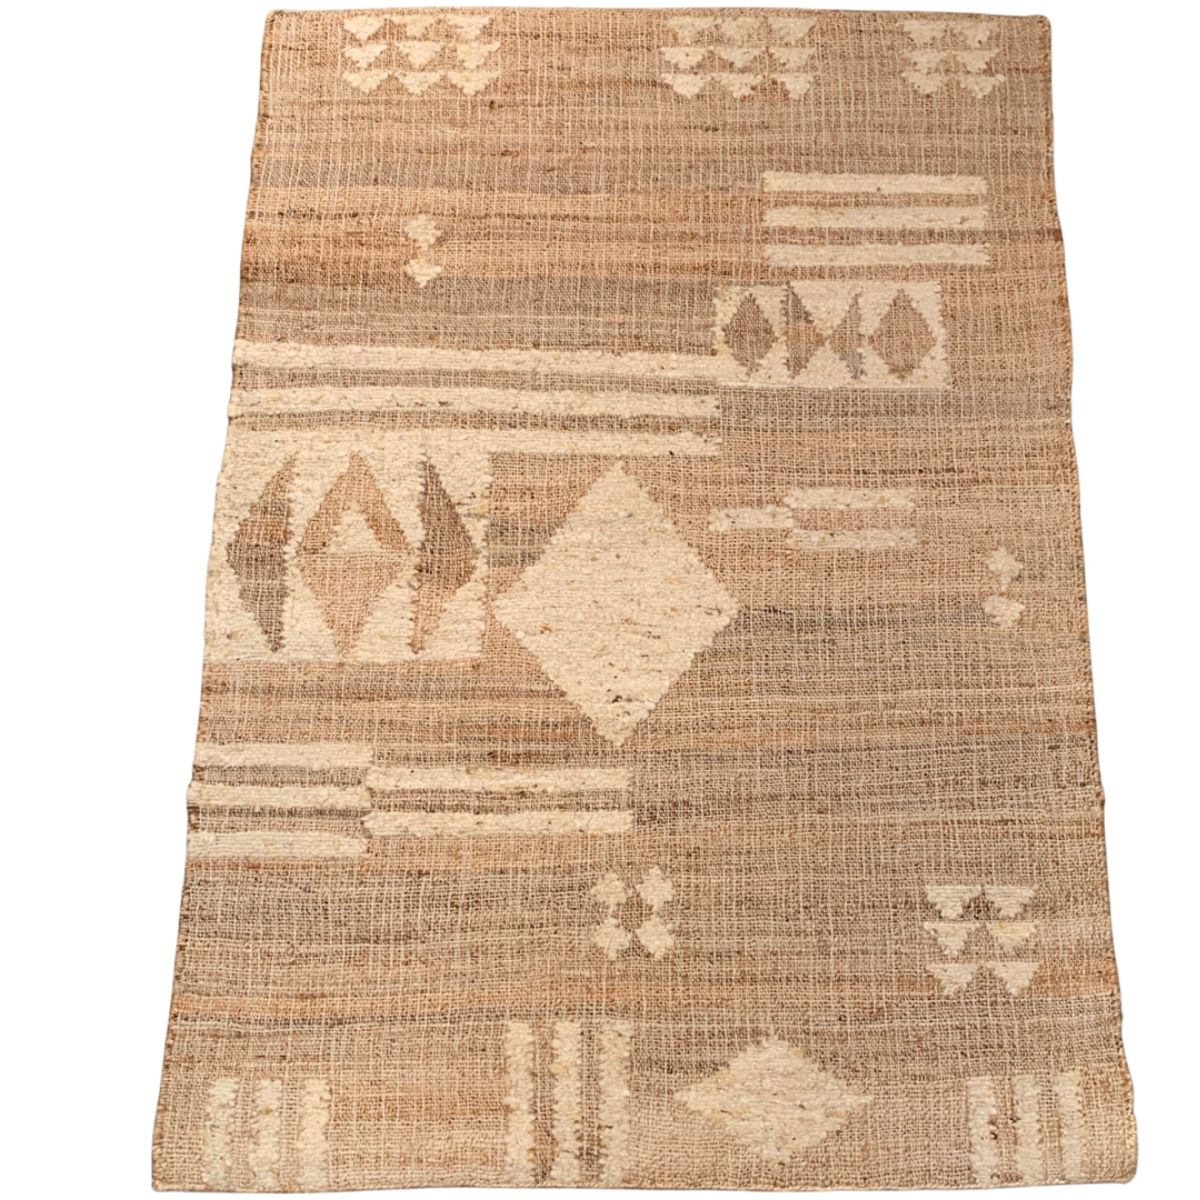 rug natural jute new zealand wool panja weaving 120x180cm